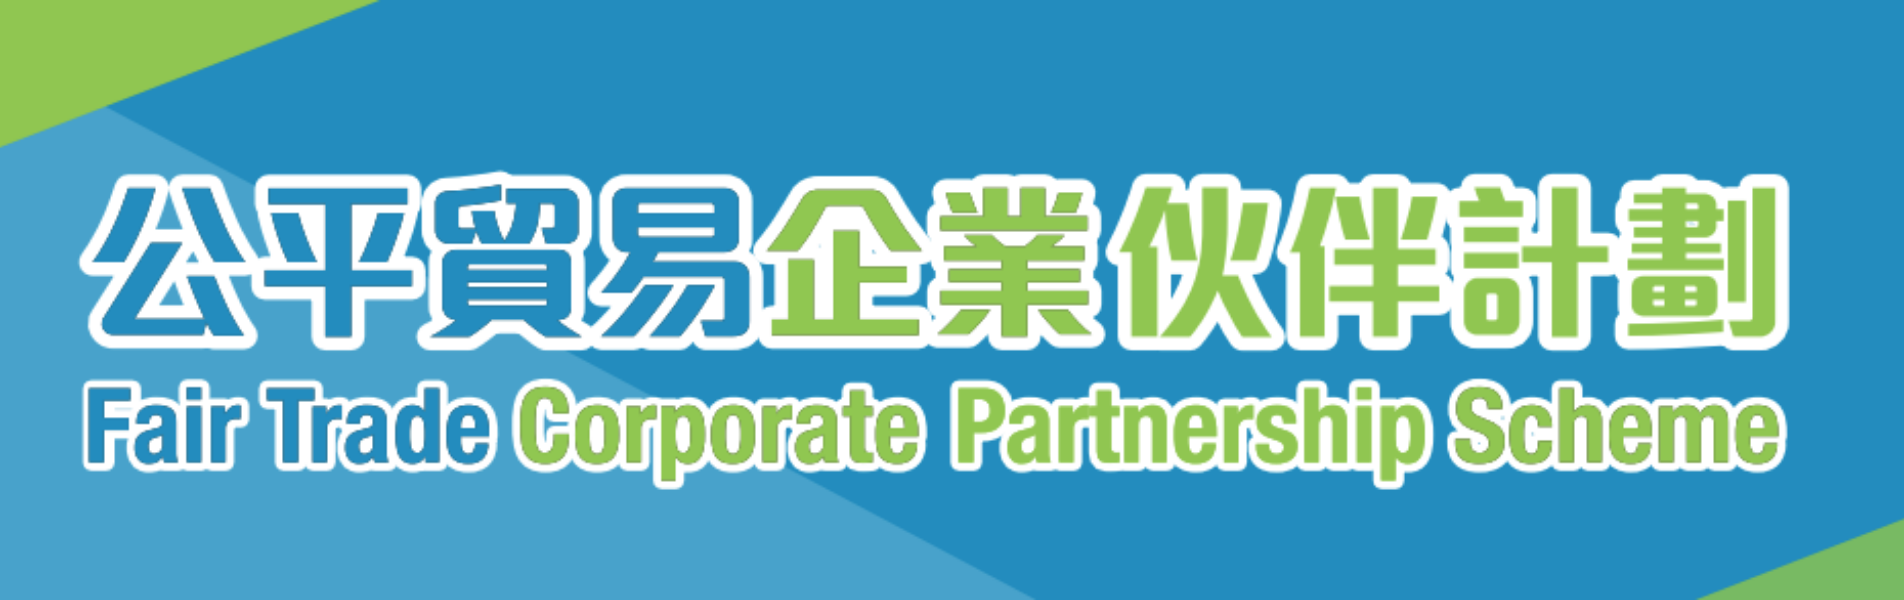 Fair Trade Corporate Partnership Scheme